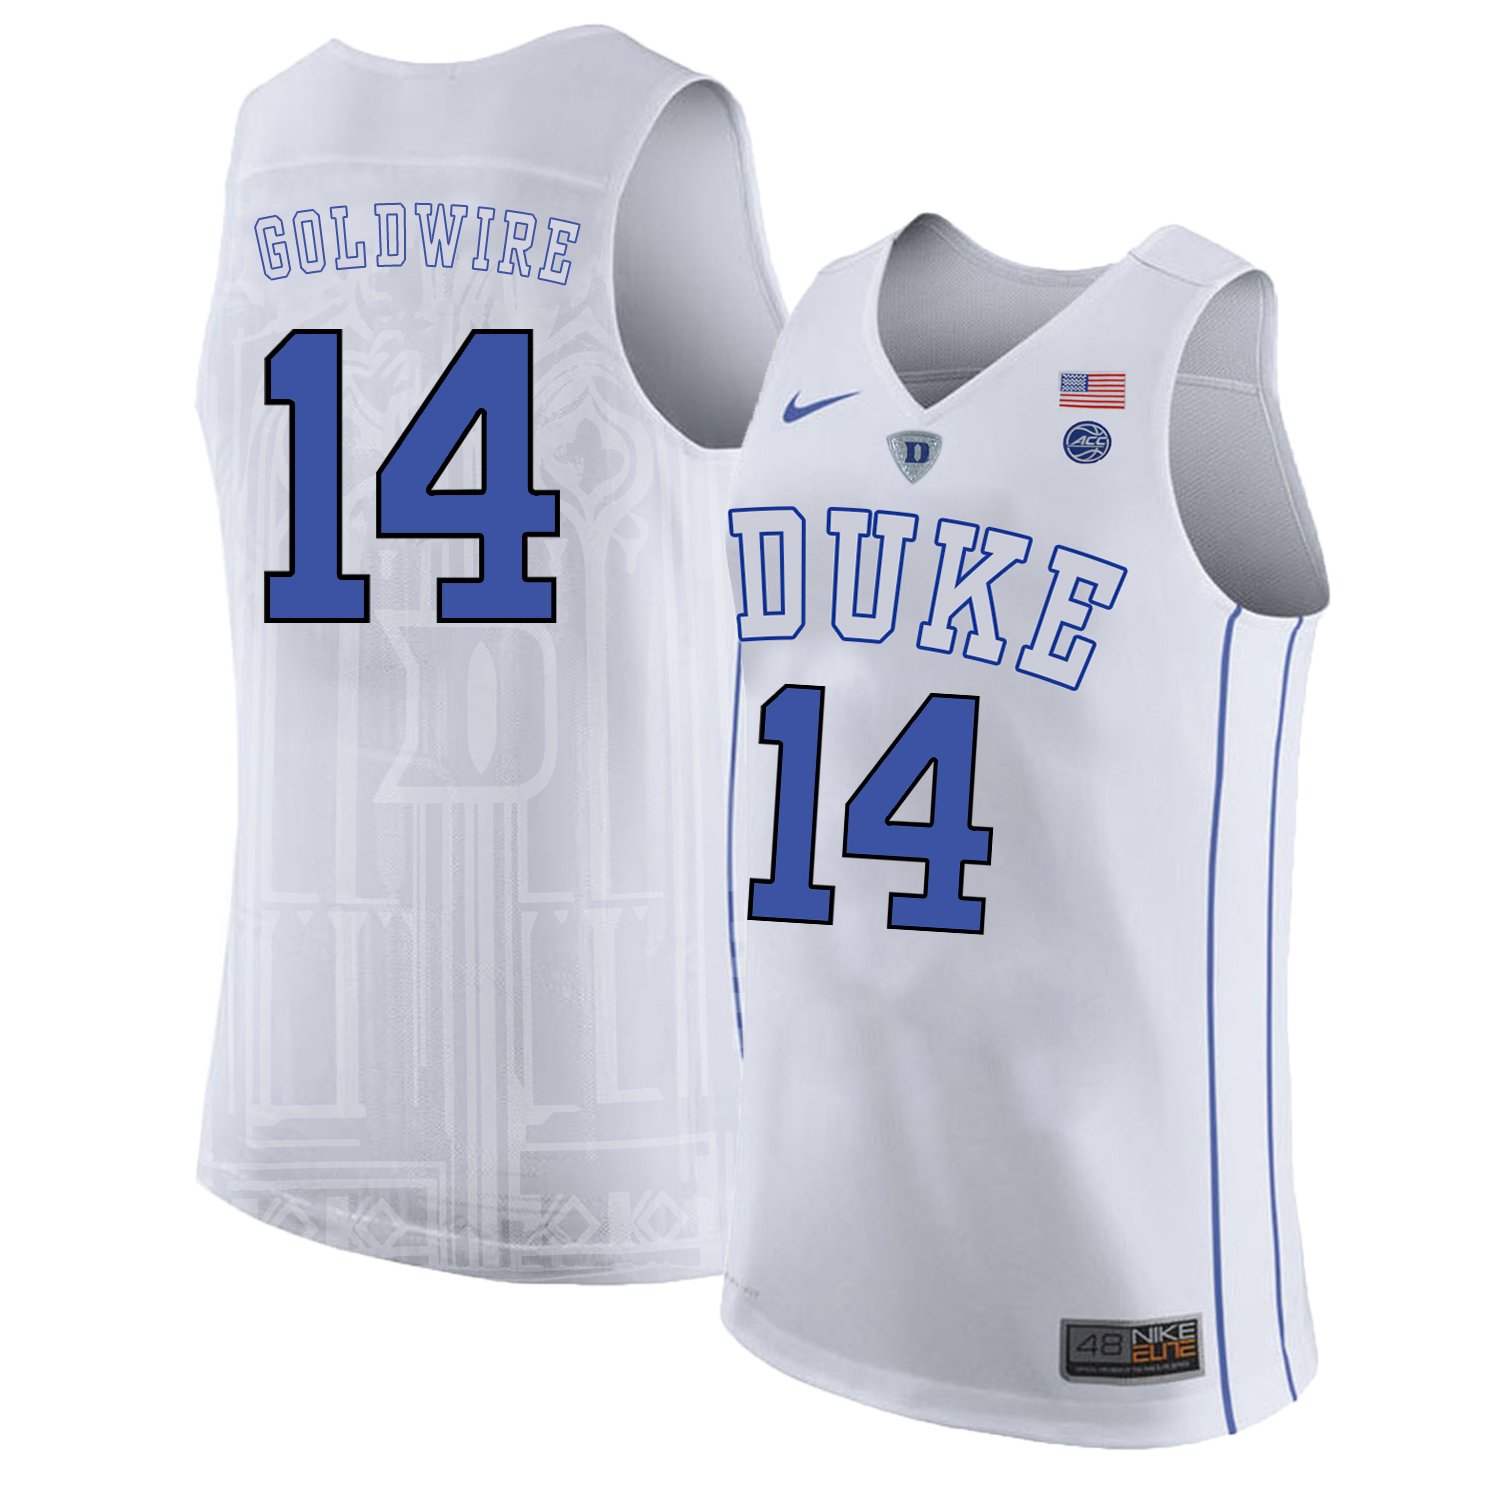 Duke Blue Devils 14 Jordan Goldwire White Nike College Basketball Jersey